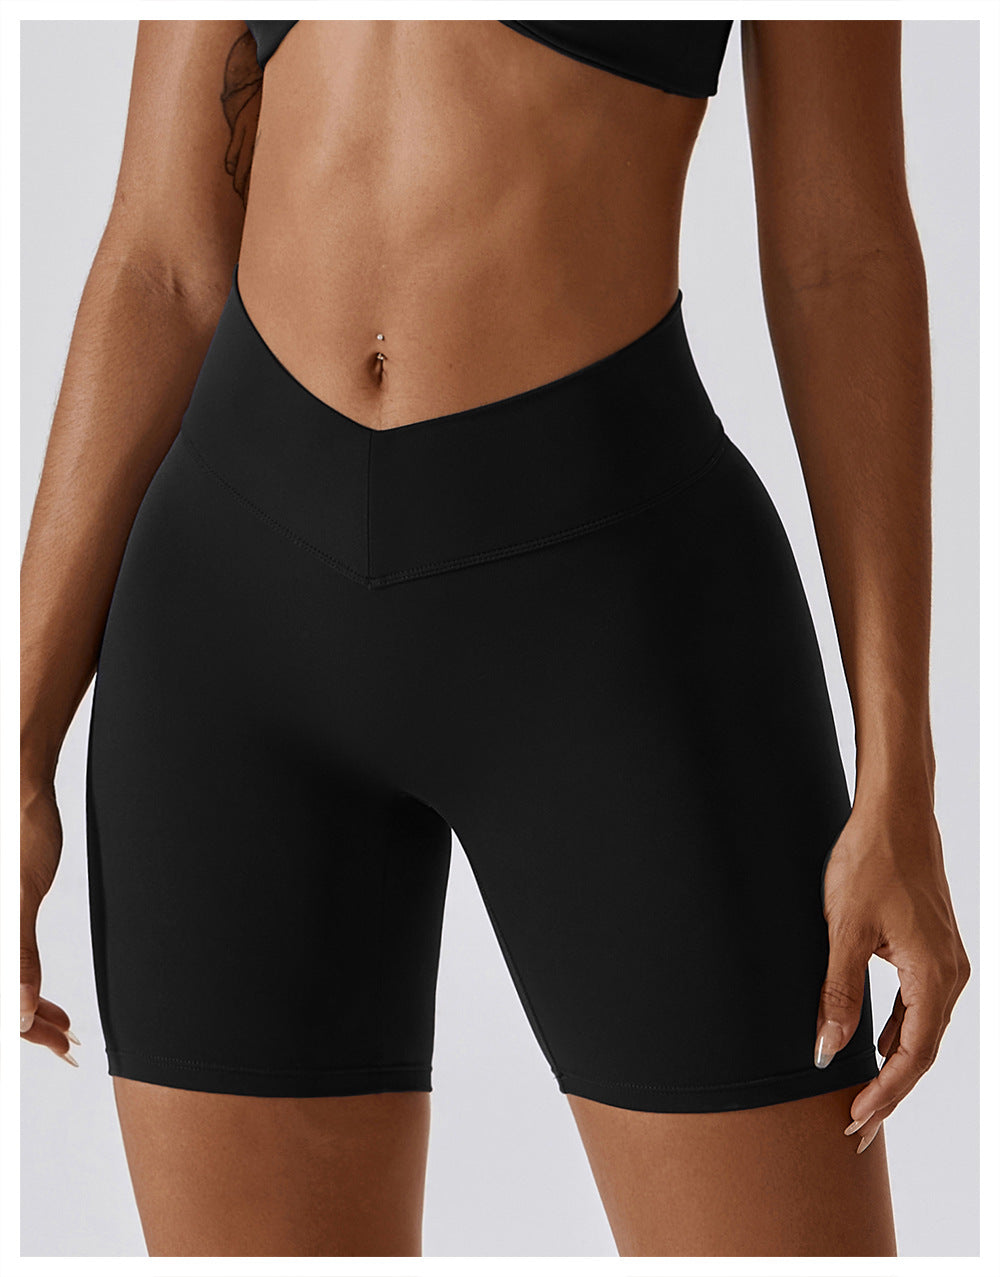 Nude Feel Tight Yoga Shorts Women High Waist Hip Lift Fitness Pants Running Slim Fit Sports Shorts